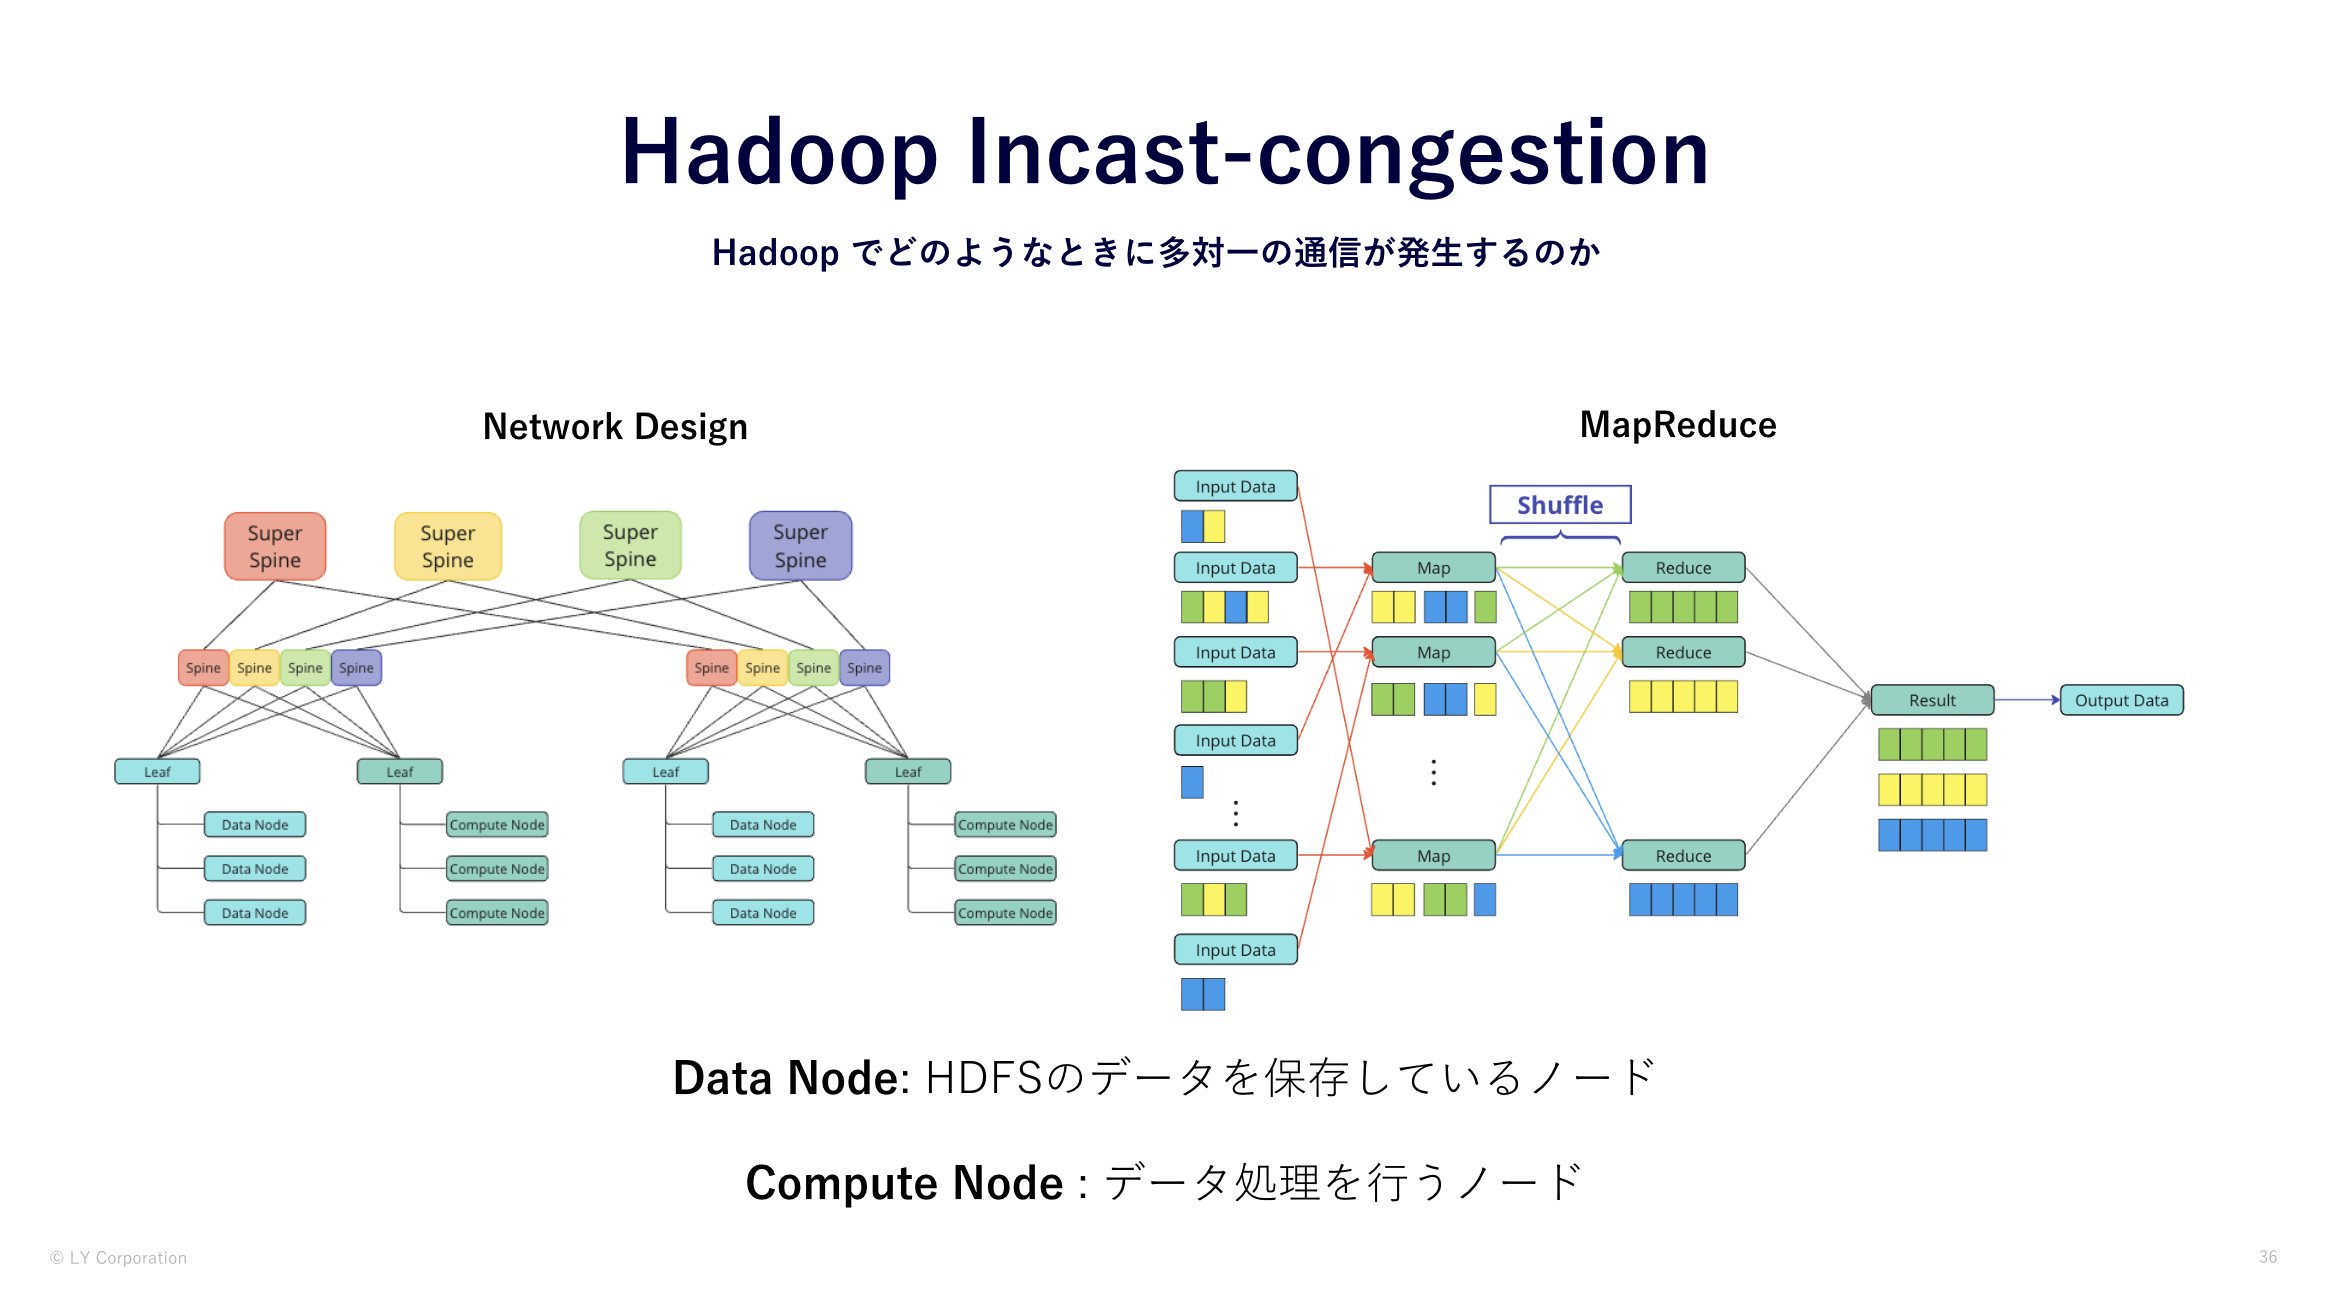 Hadoopで発生するIncast-congestion